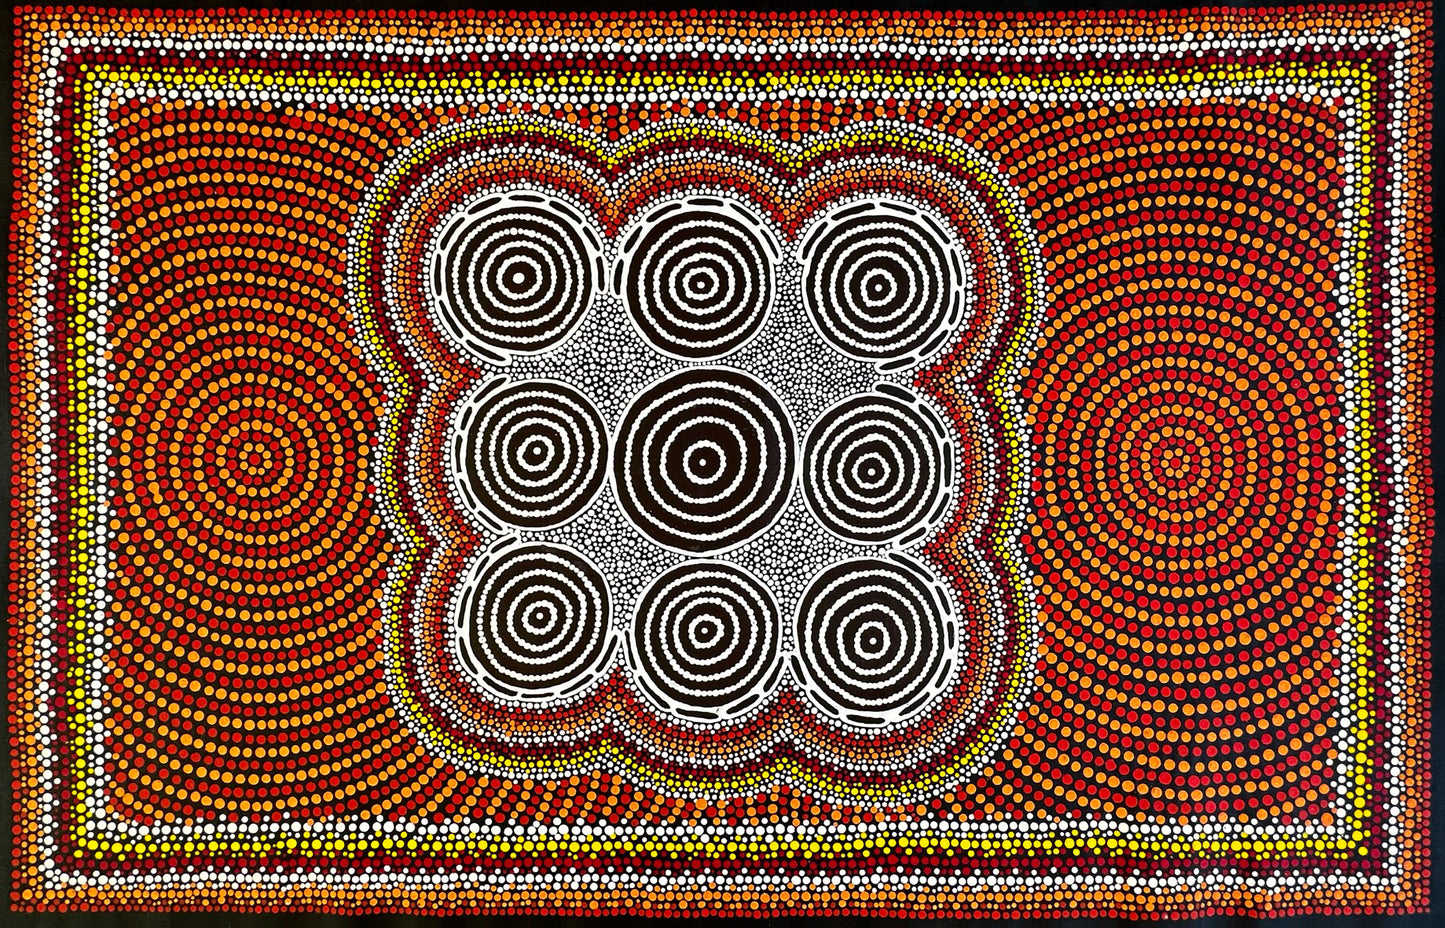 Theresa Nurpurrurla Ross Flying Ants Termites Pamapardu Yuendumu Ingigenous Art Aboriginal Art Australian Art Painting Dot paining Dot art iconography symbolism traditional art red orange Warlpiri Beautiful Art